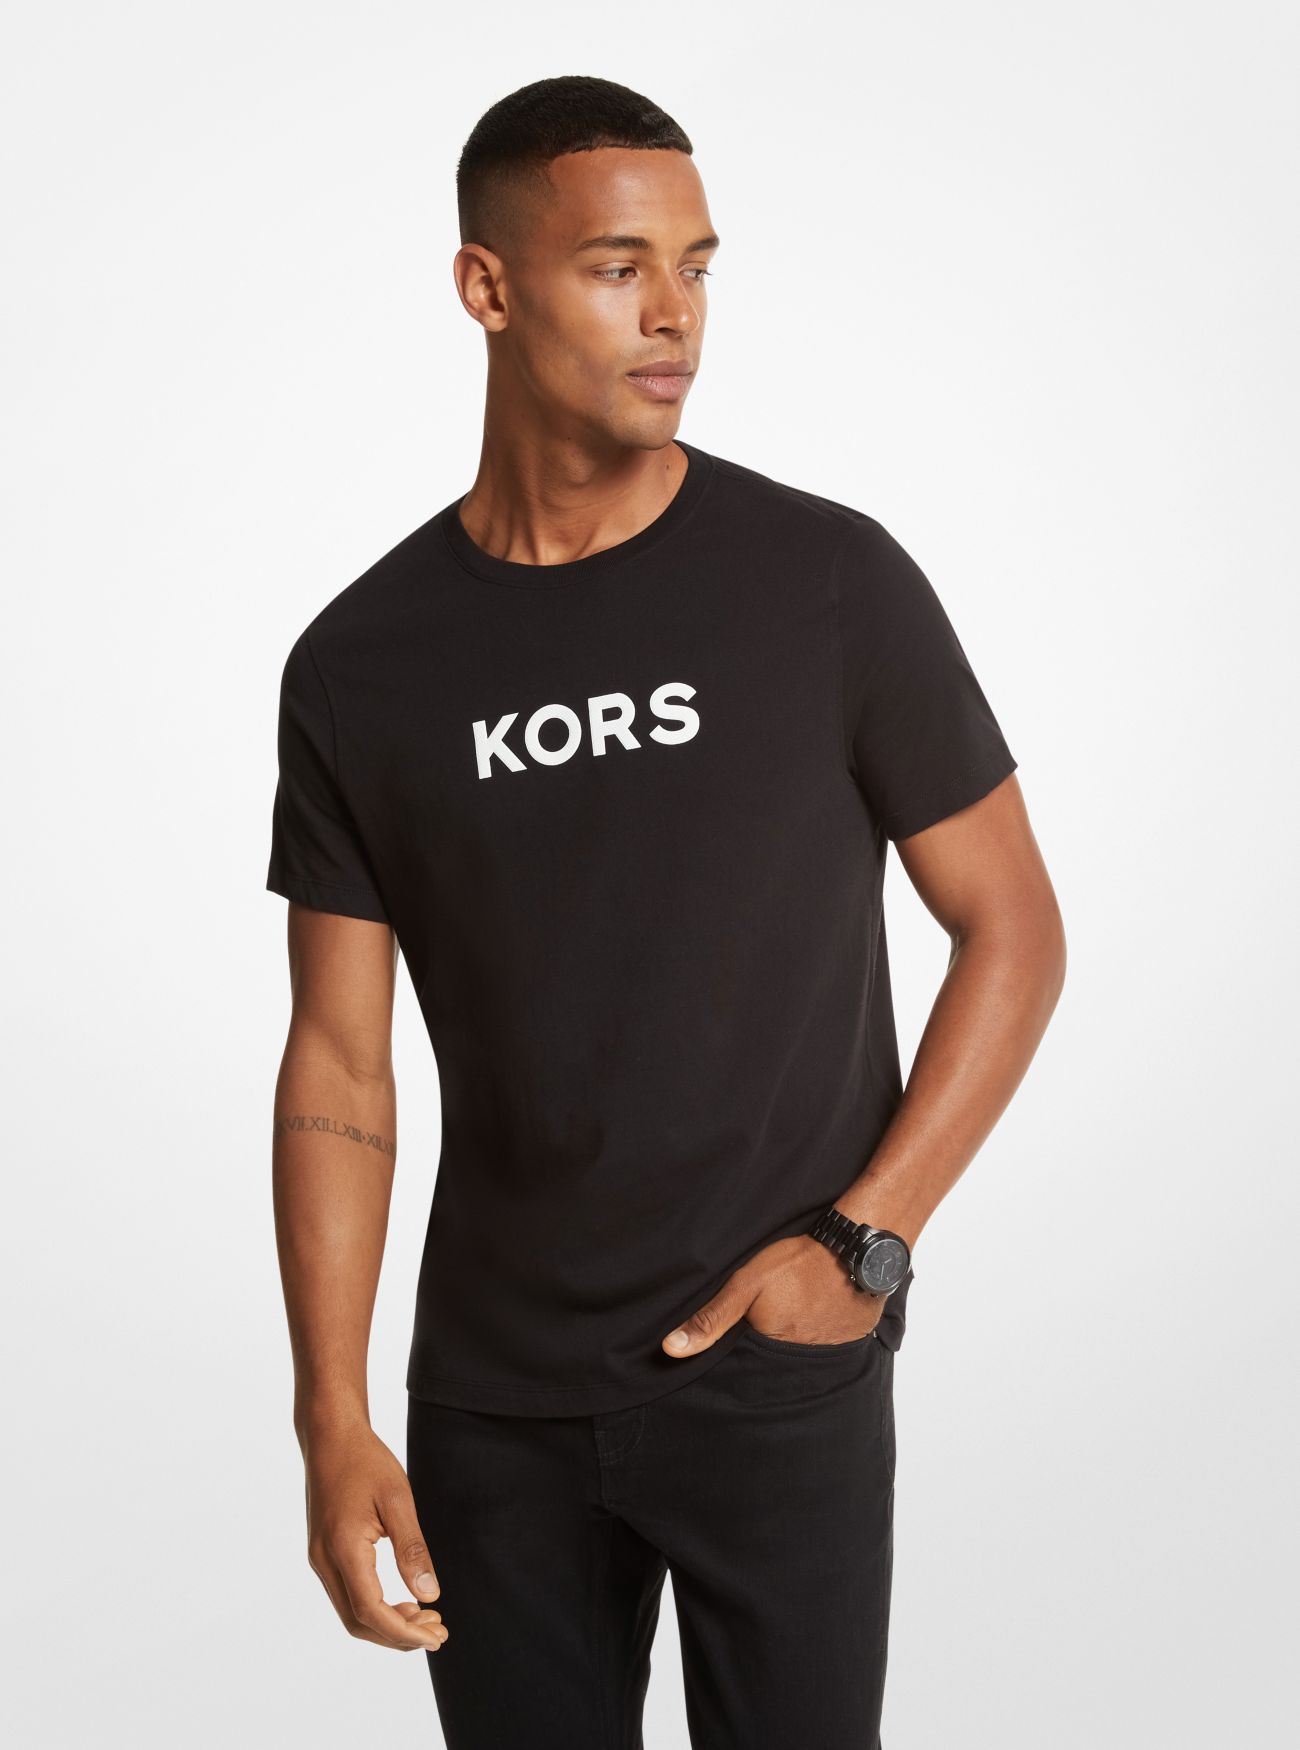 MKCamiseta de algodón con estampado KORS - Negro(Negro) - Michael Kors